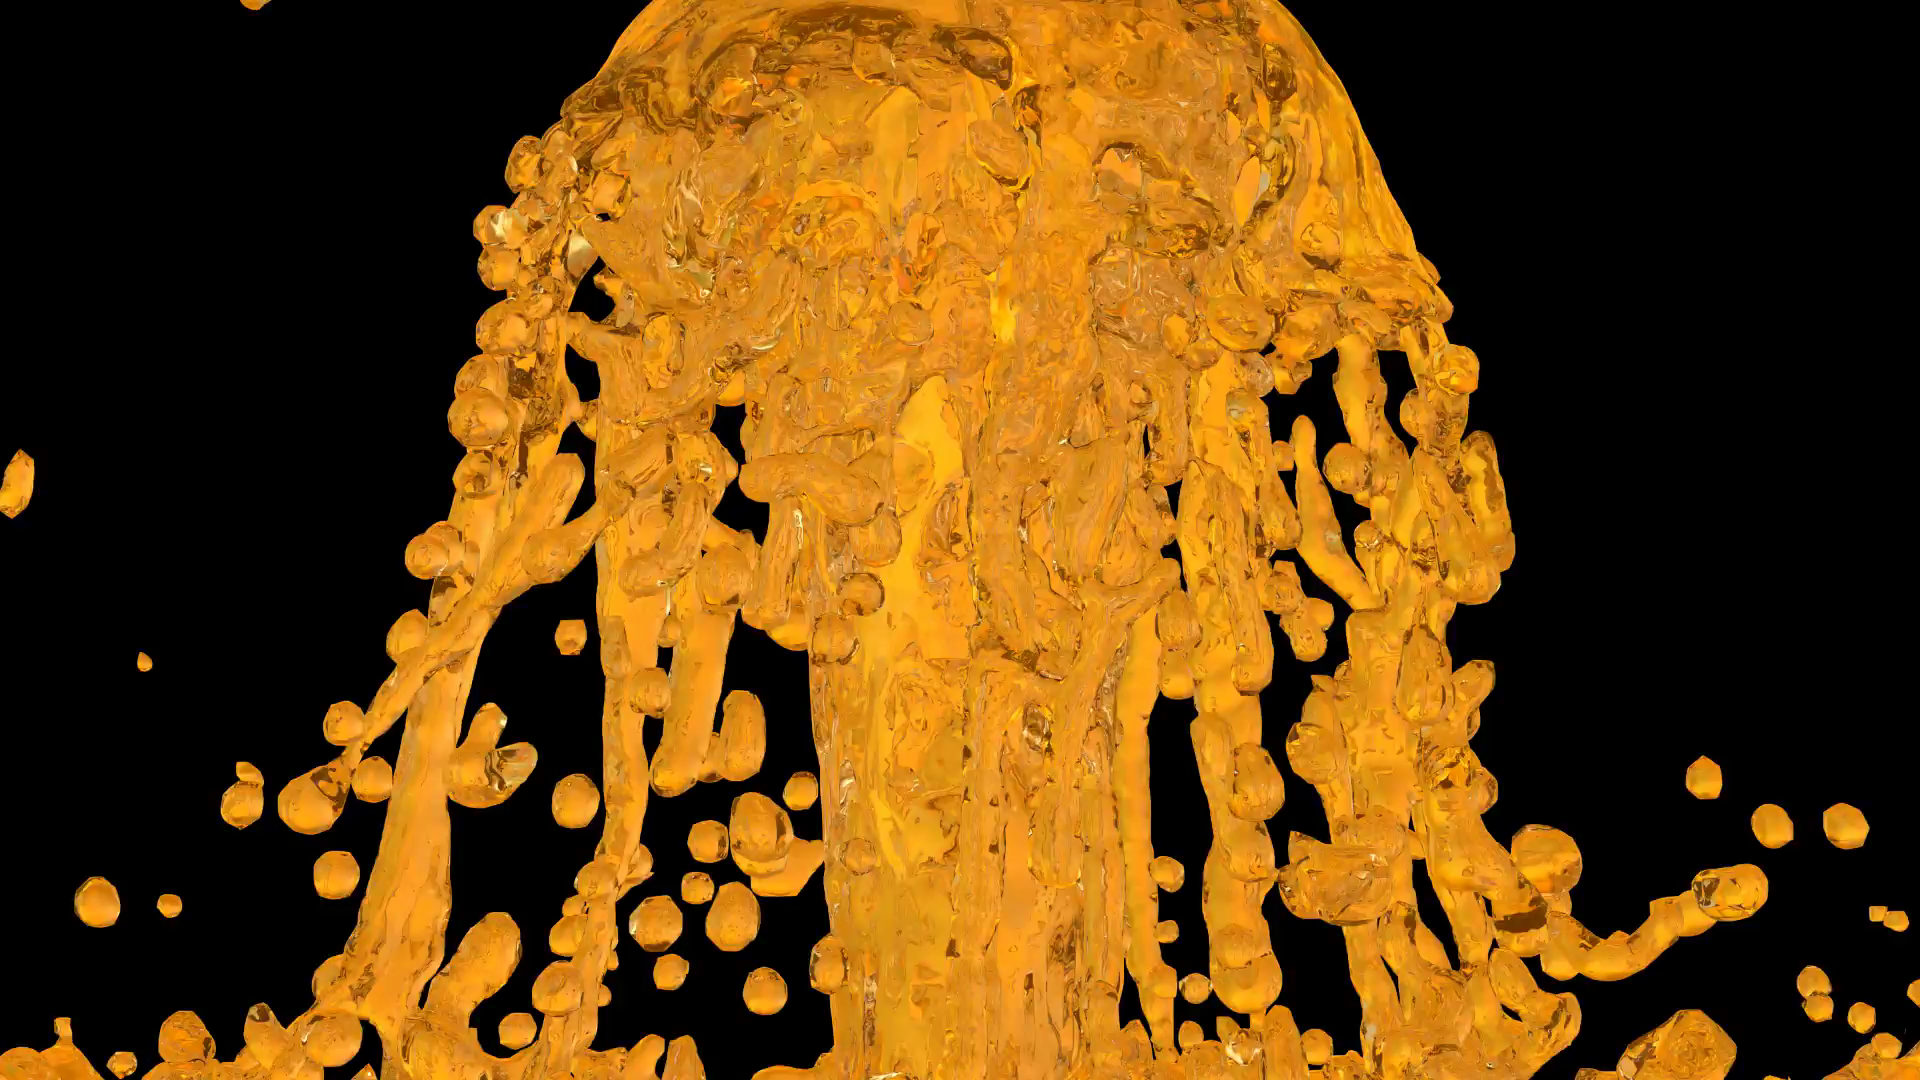 Animated fountain of honey. T